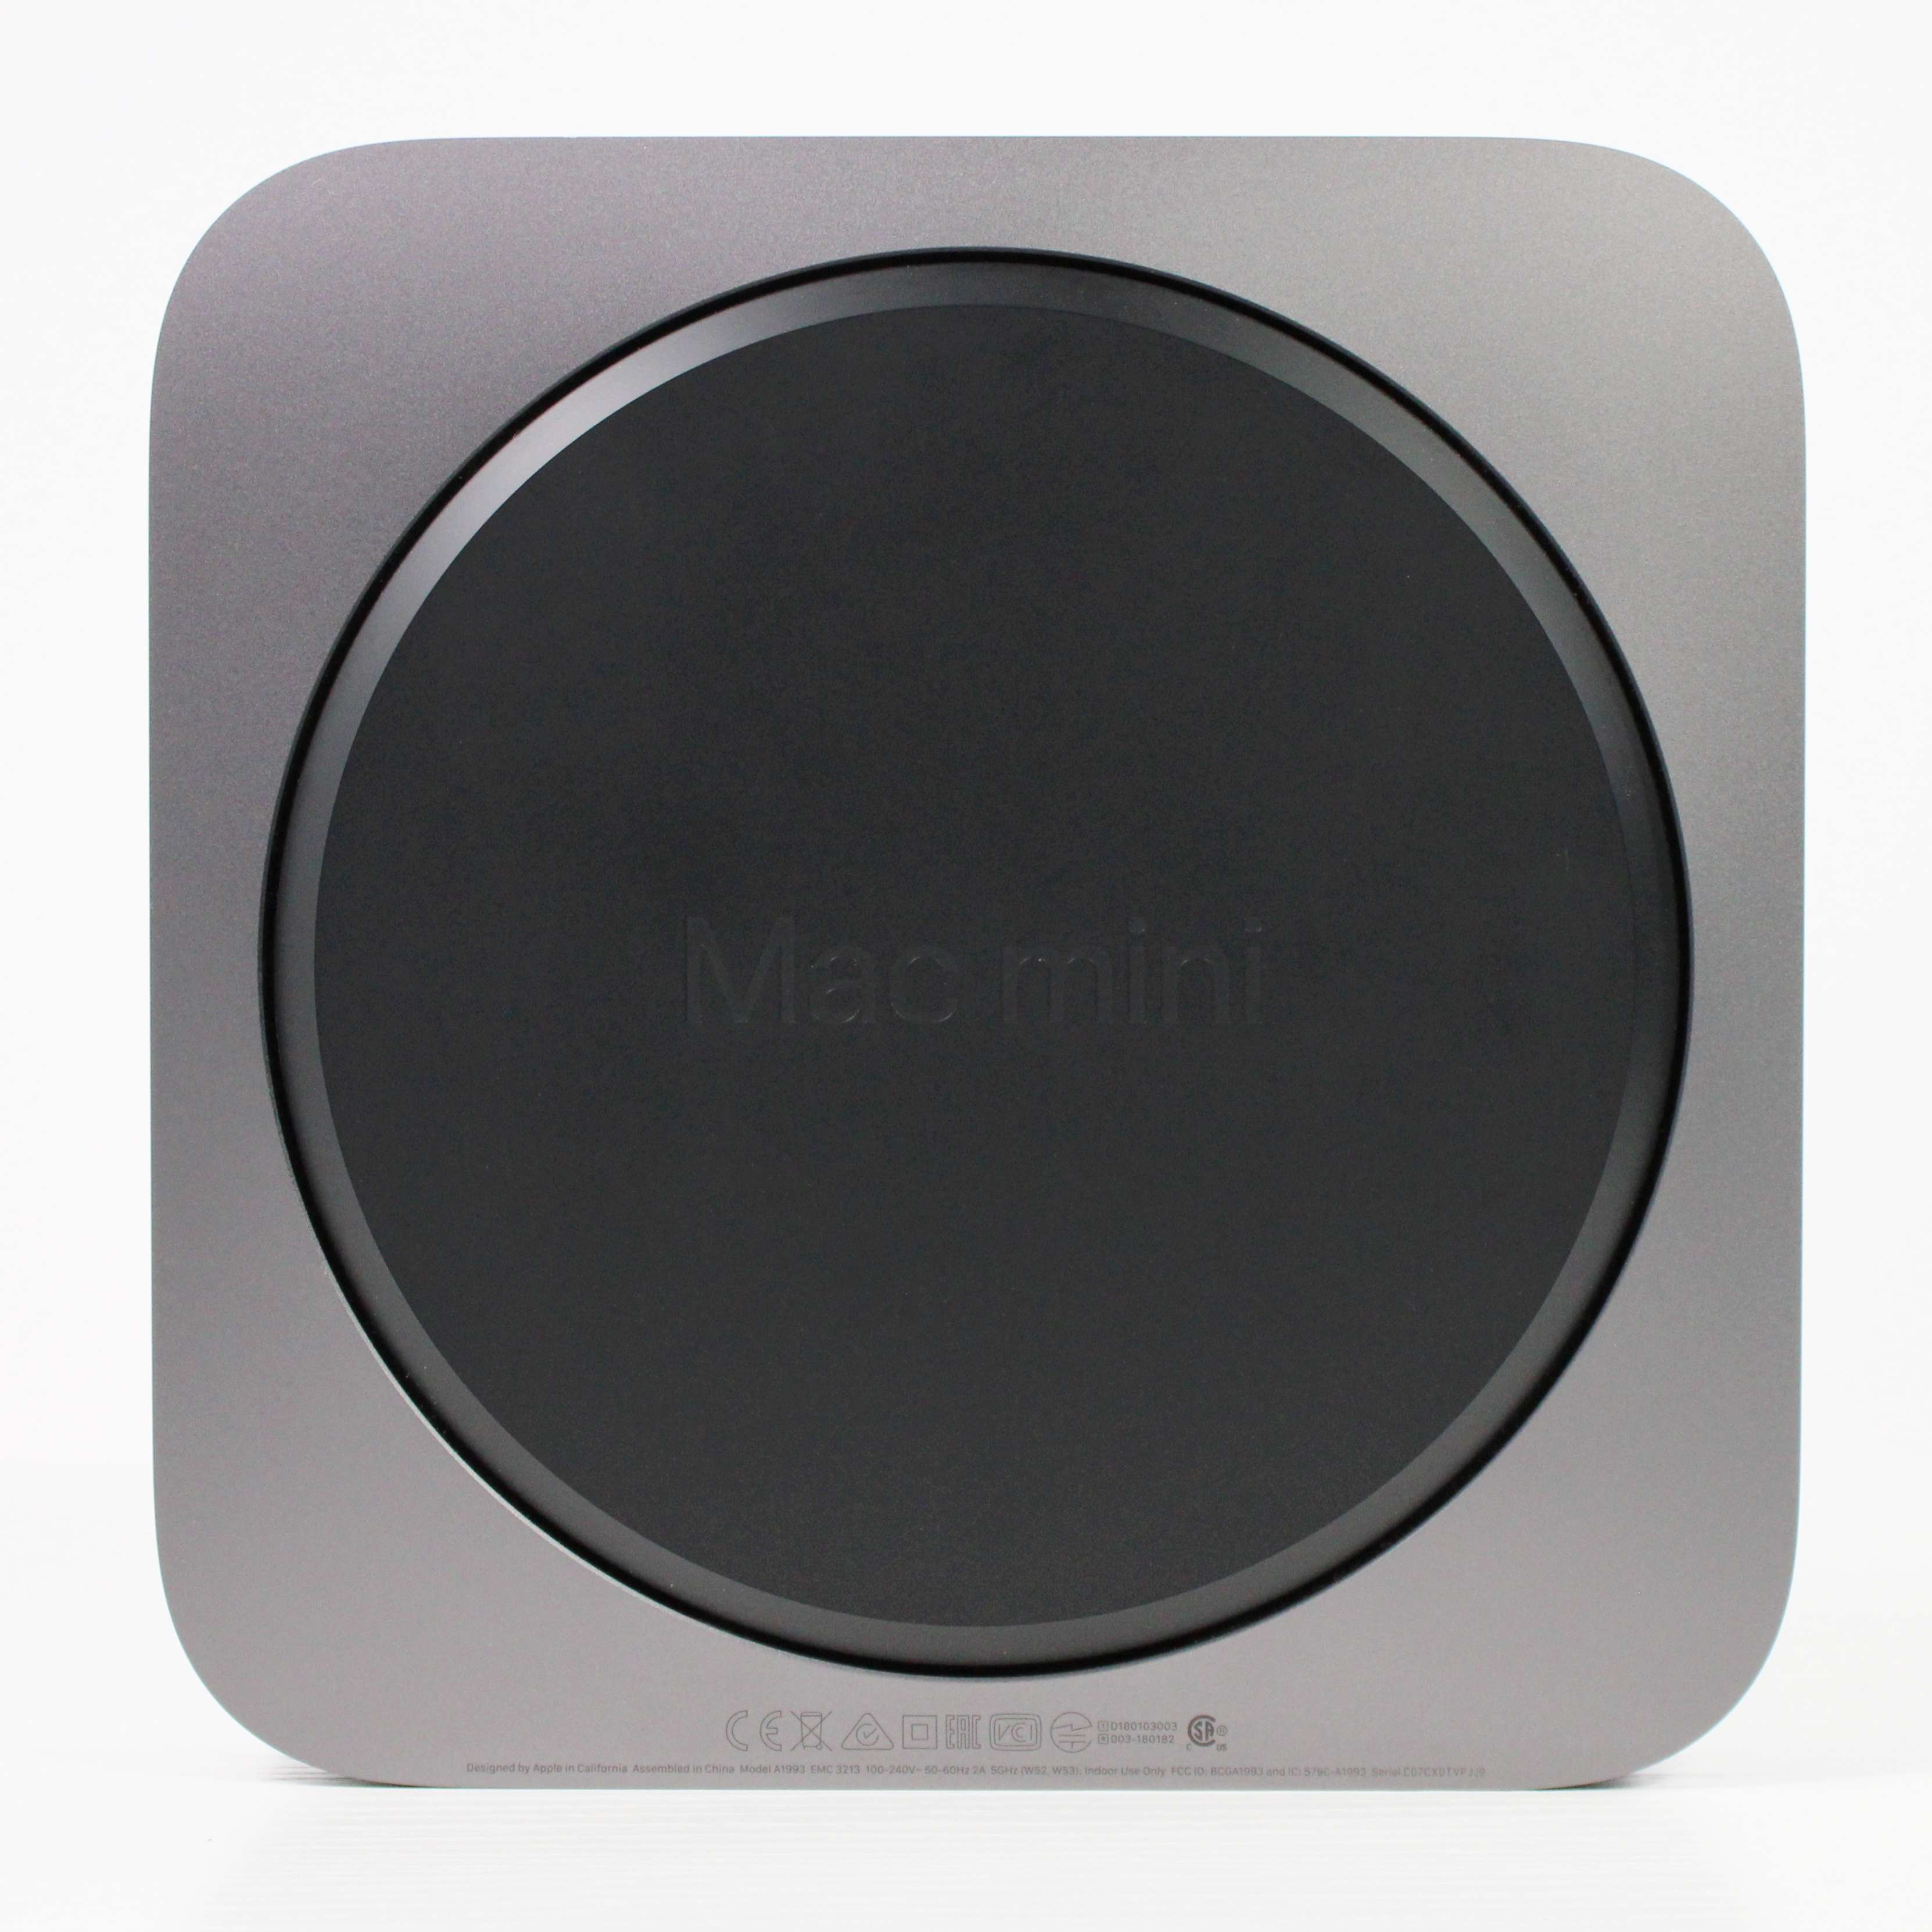 2018 Apple Mac Mini 3.2GHz Core i7-8700B Macmini8,1 BTO/CTO Space Grey